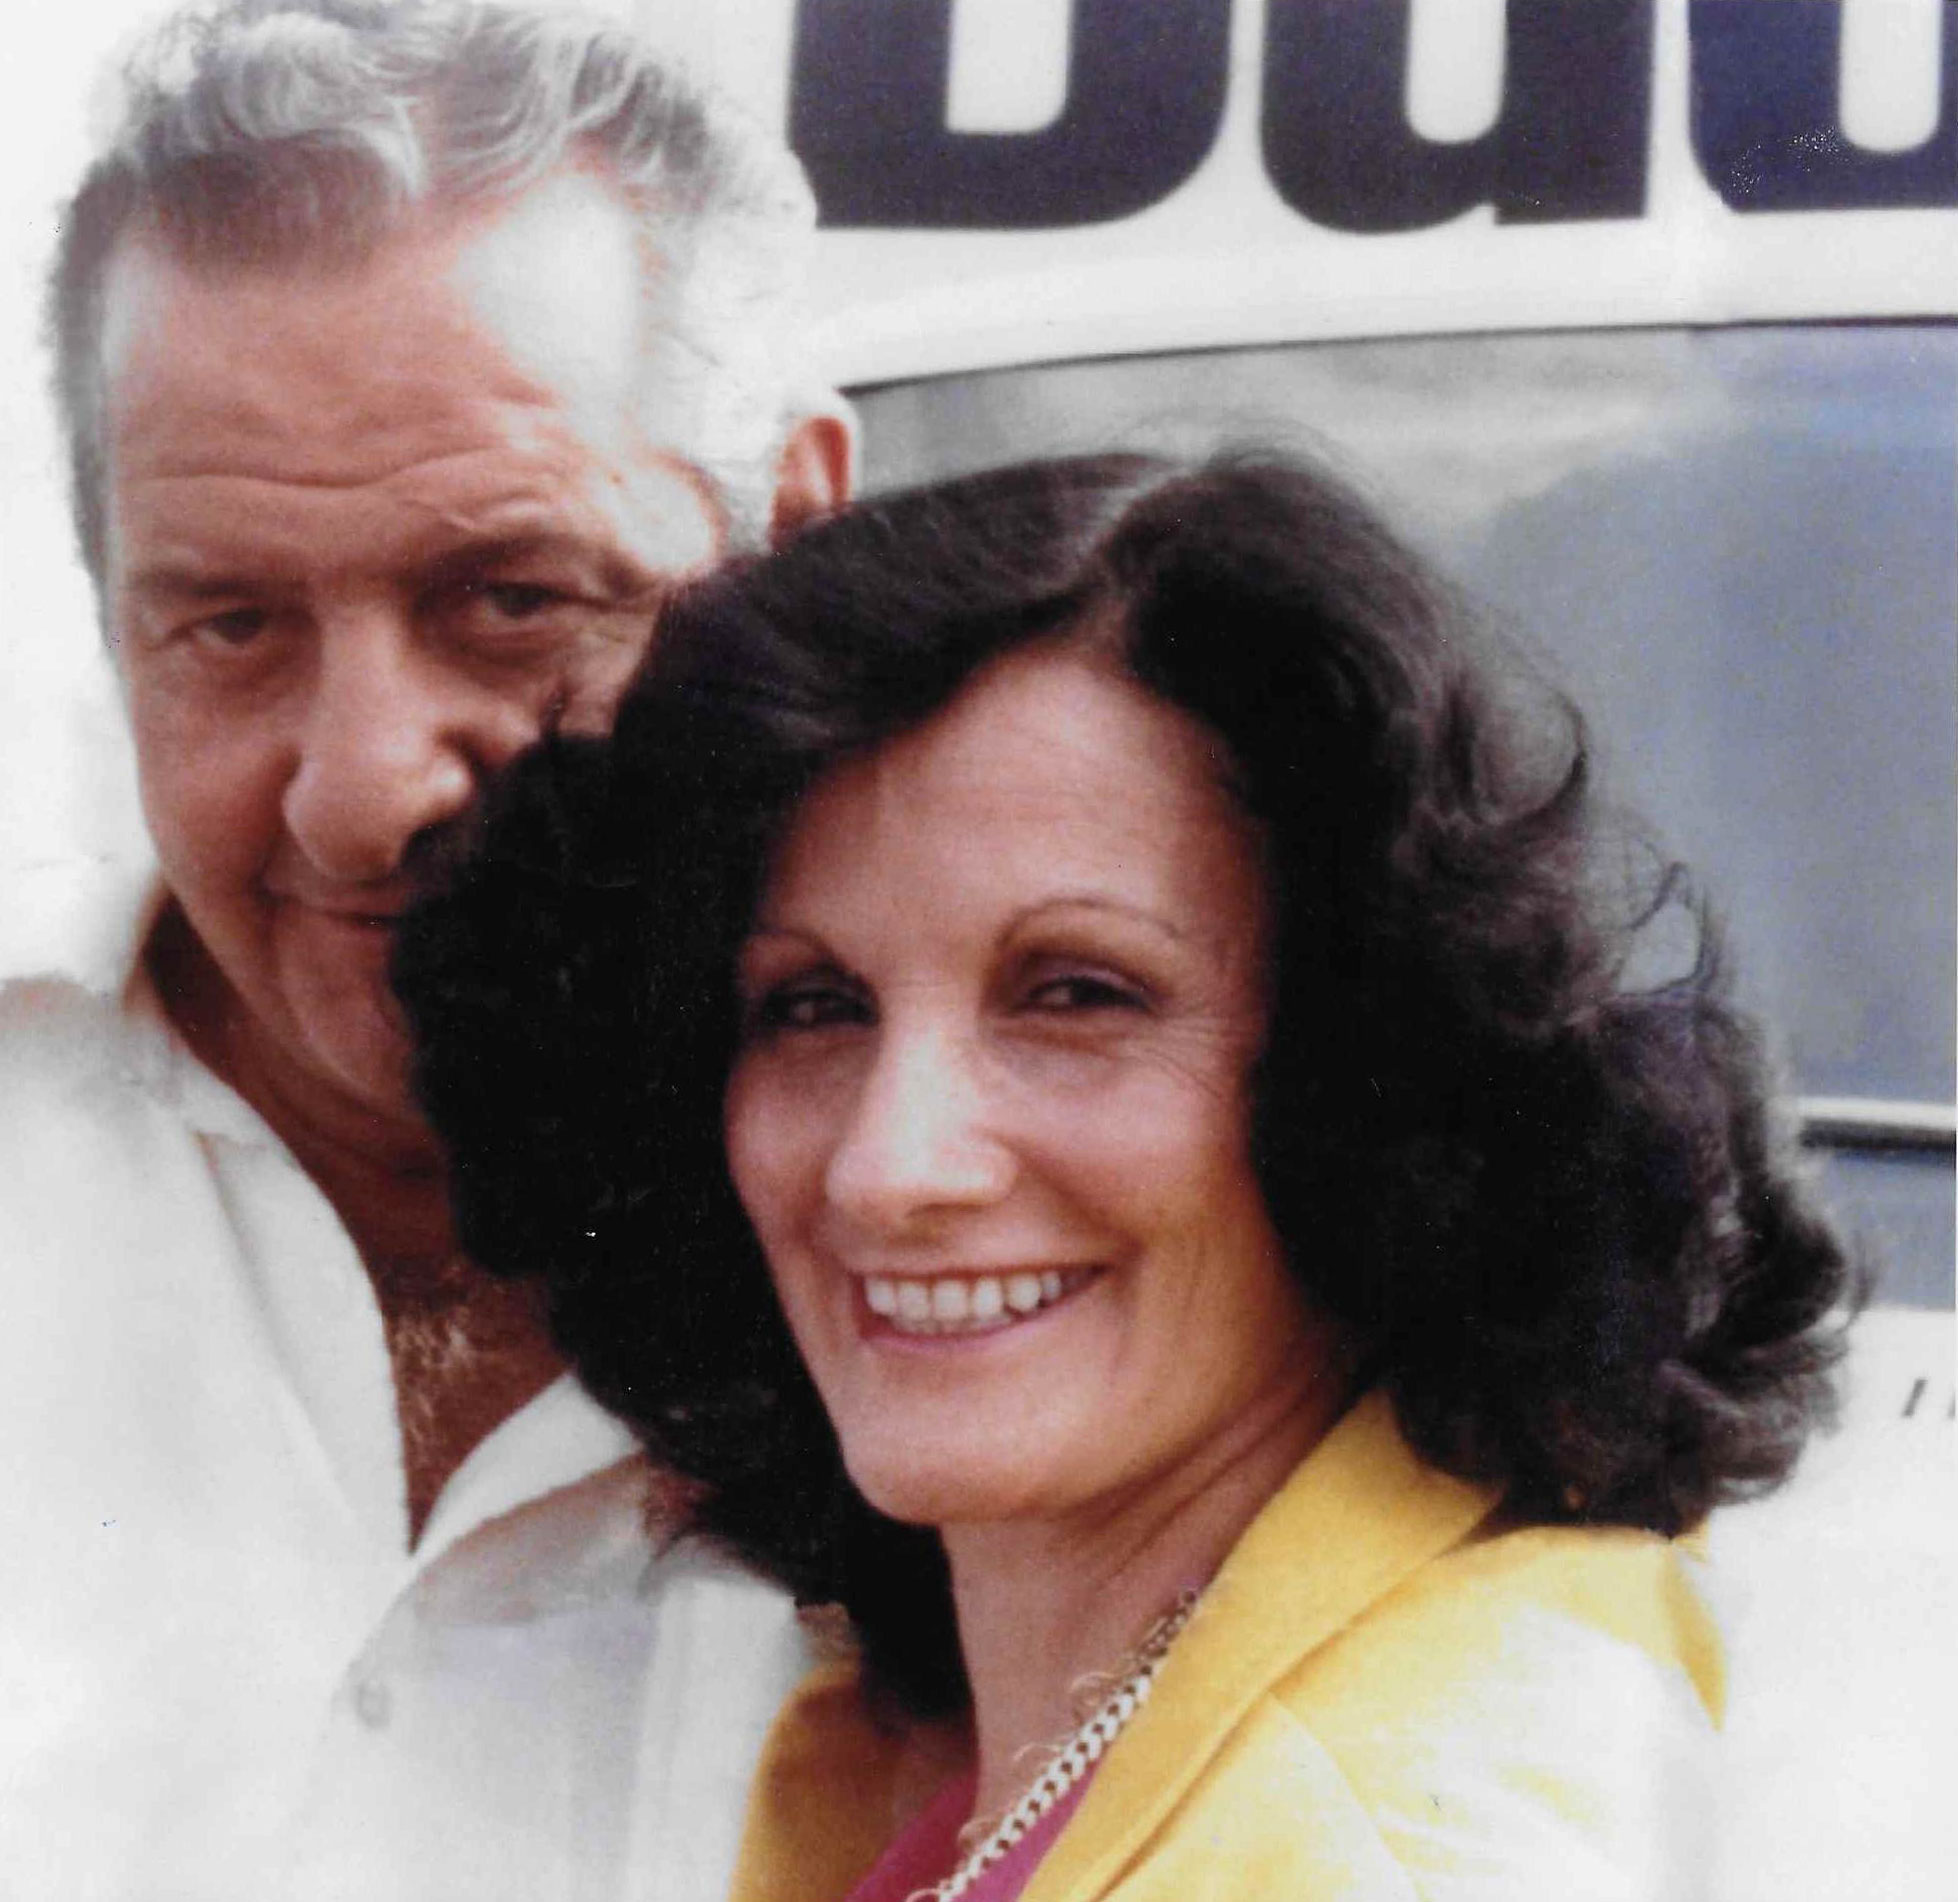 Al and Daisy Monzo in 1975